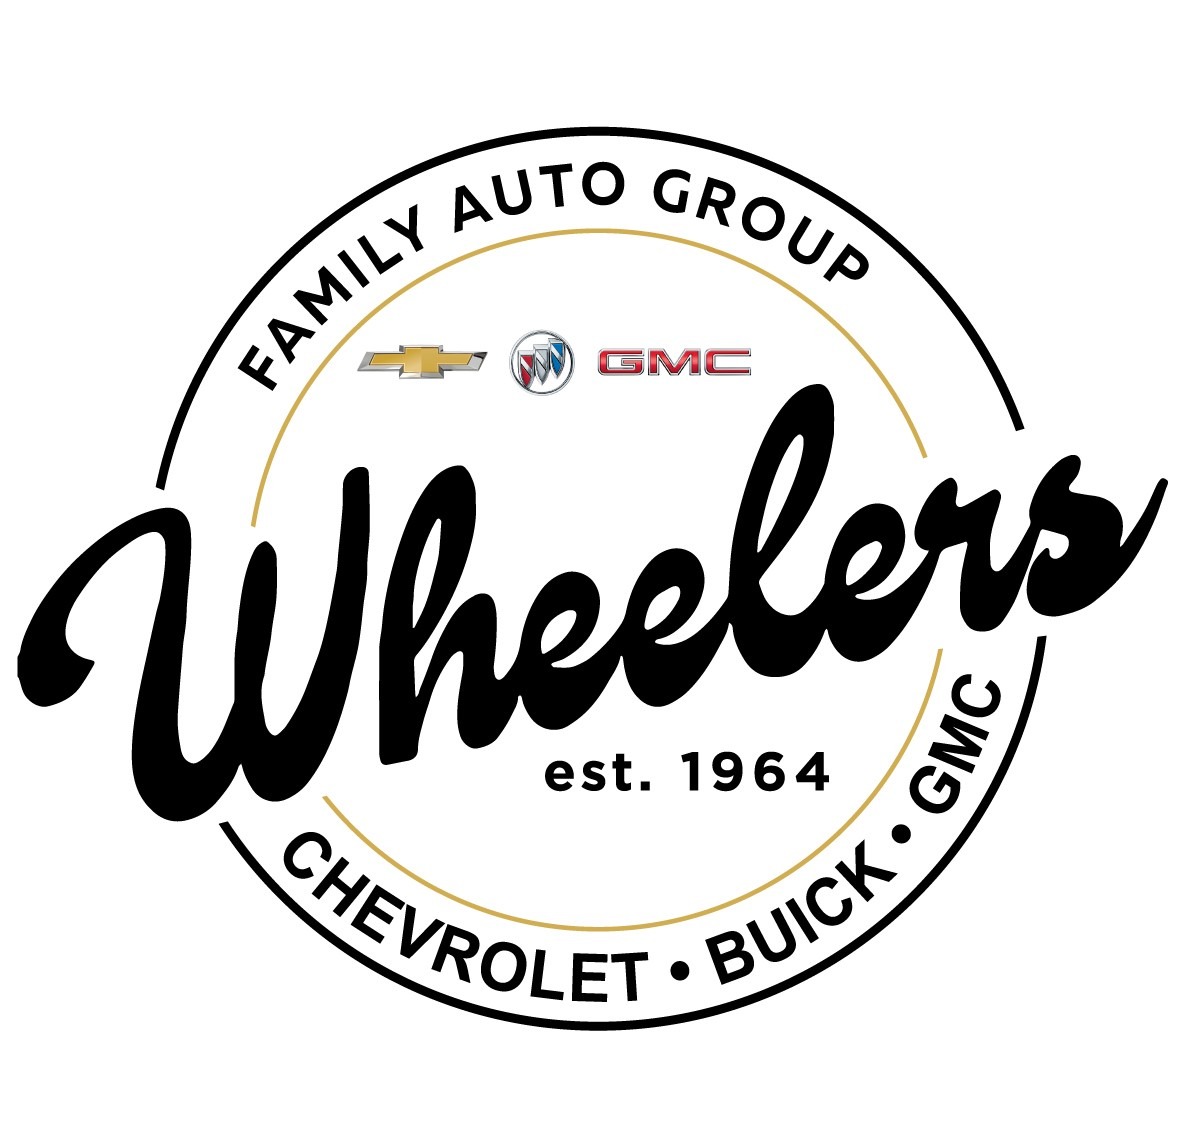 Wheelers Family Auto Group